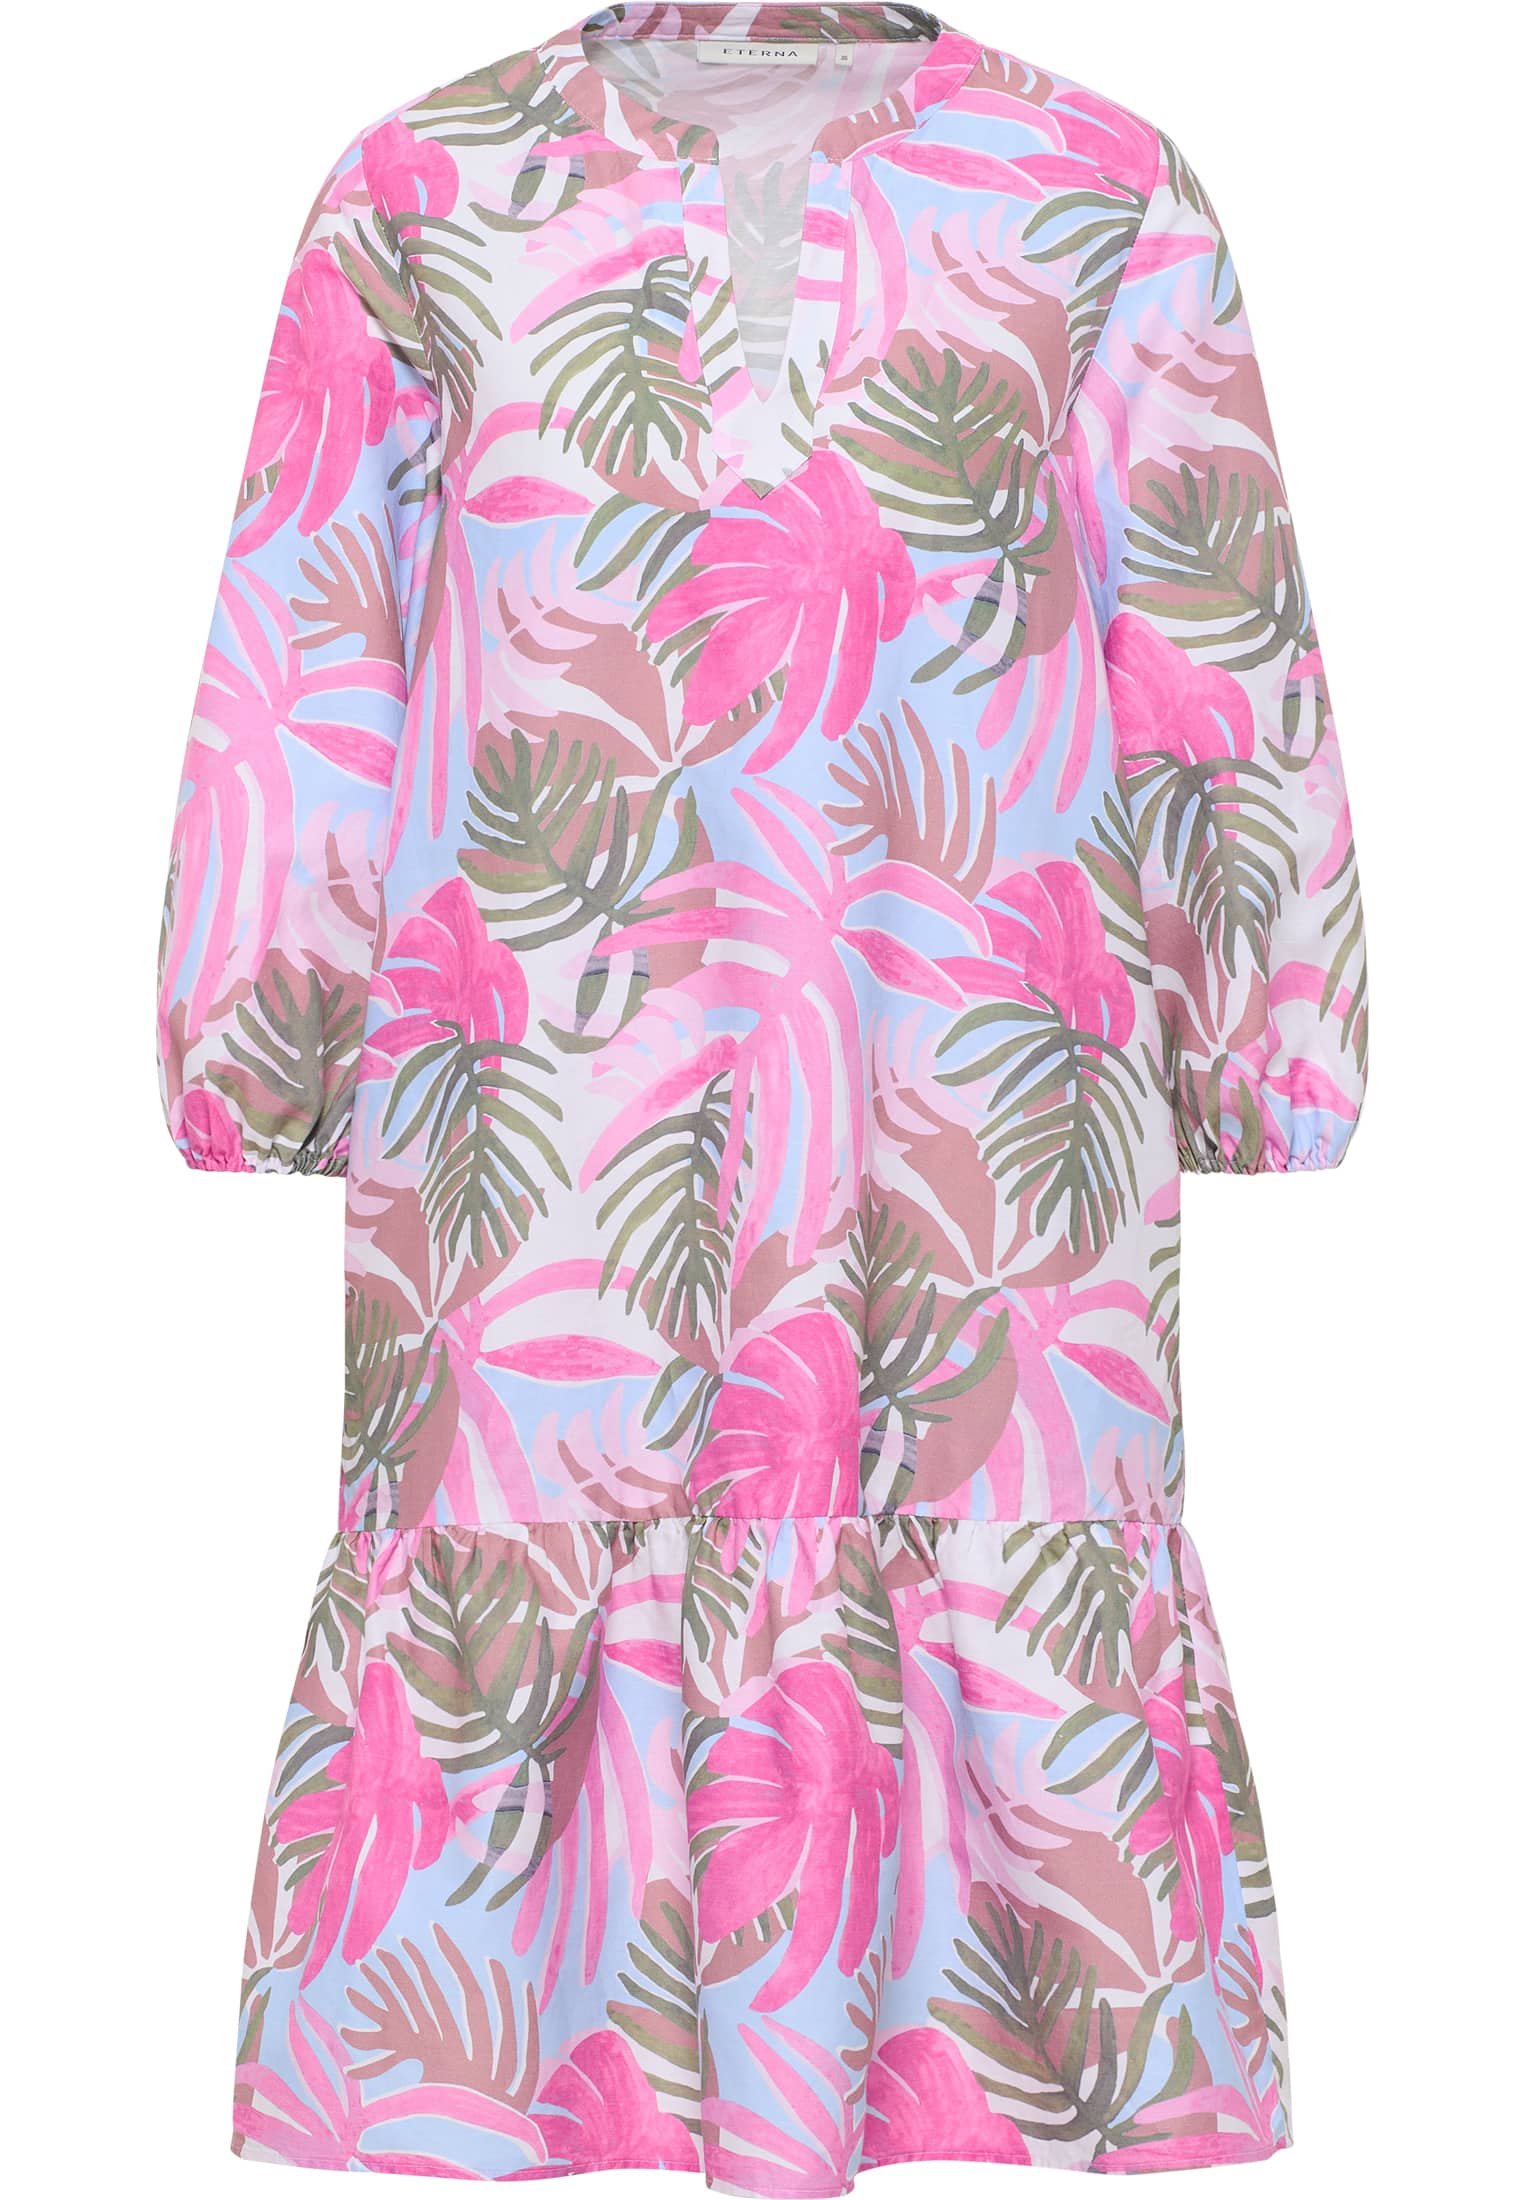 Shirt dress in rose 3/4 sleeves printed | | 2DR00246-15-11-46-3/4 rose | | 46